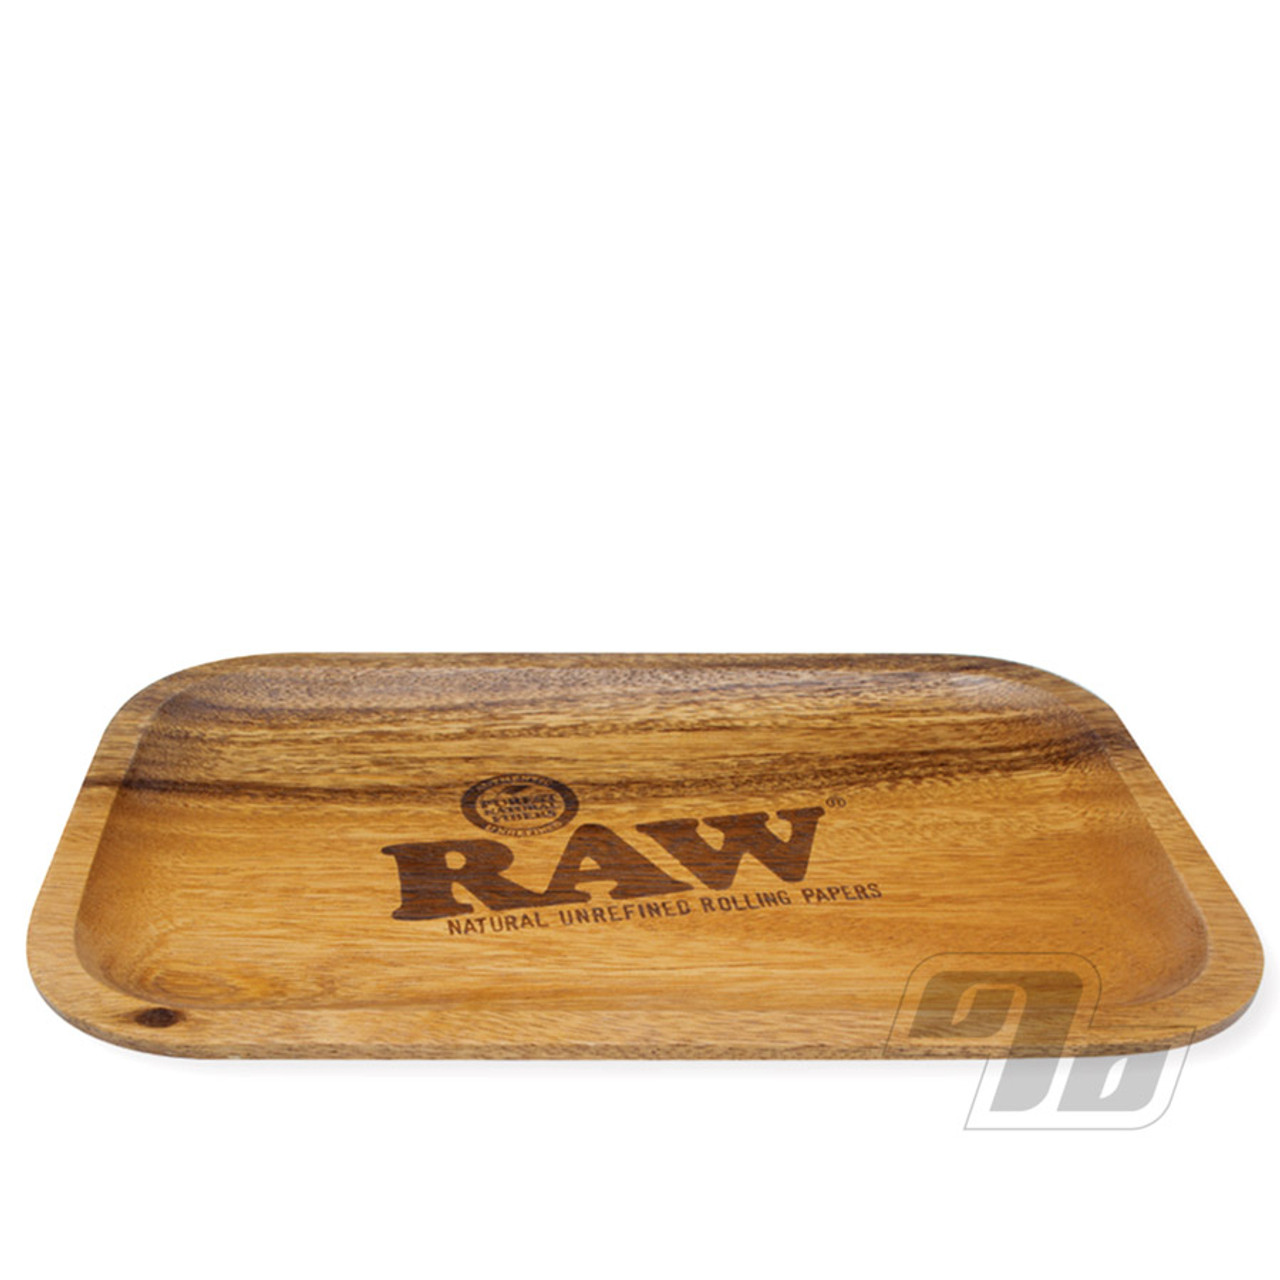 Acacia RAW Natural Handmade Wooden Rolling Tray Graining and Colour Varies 